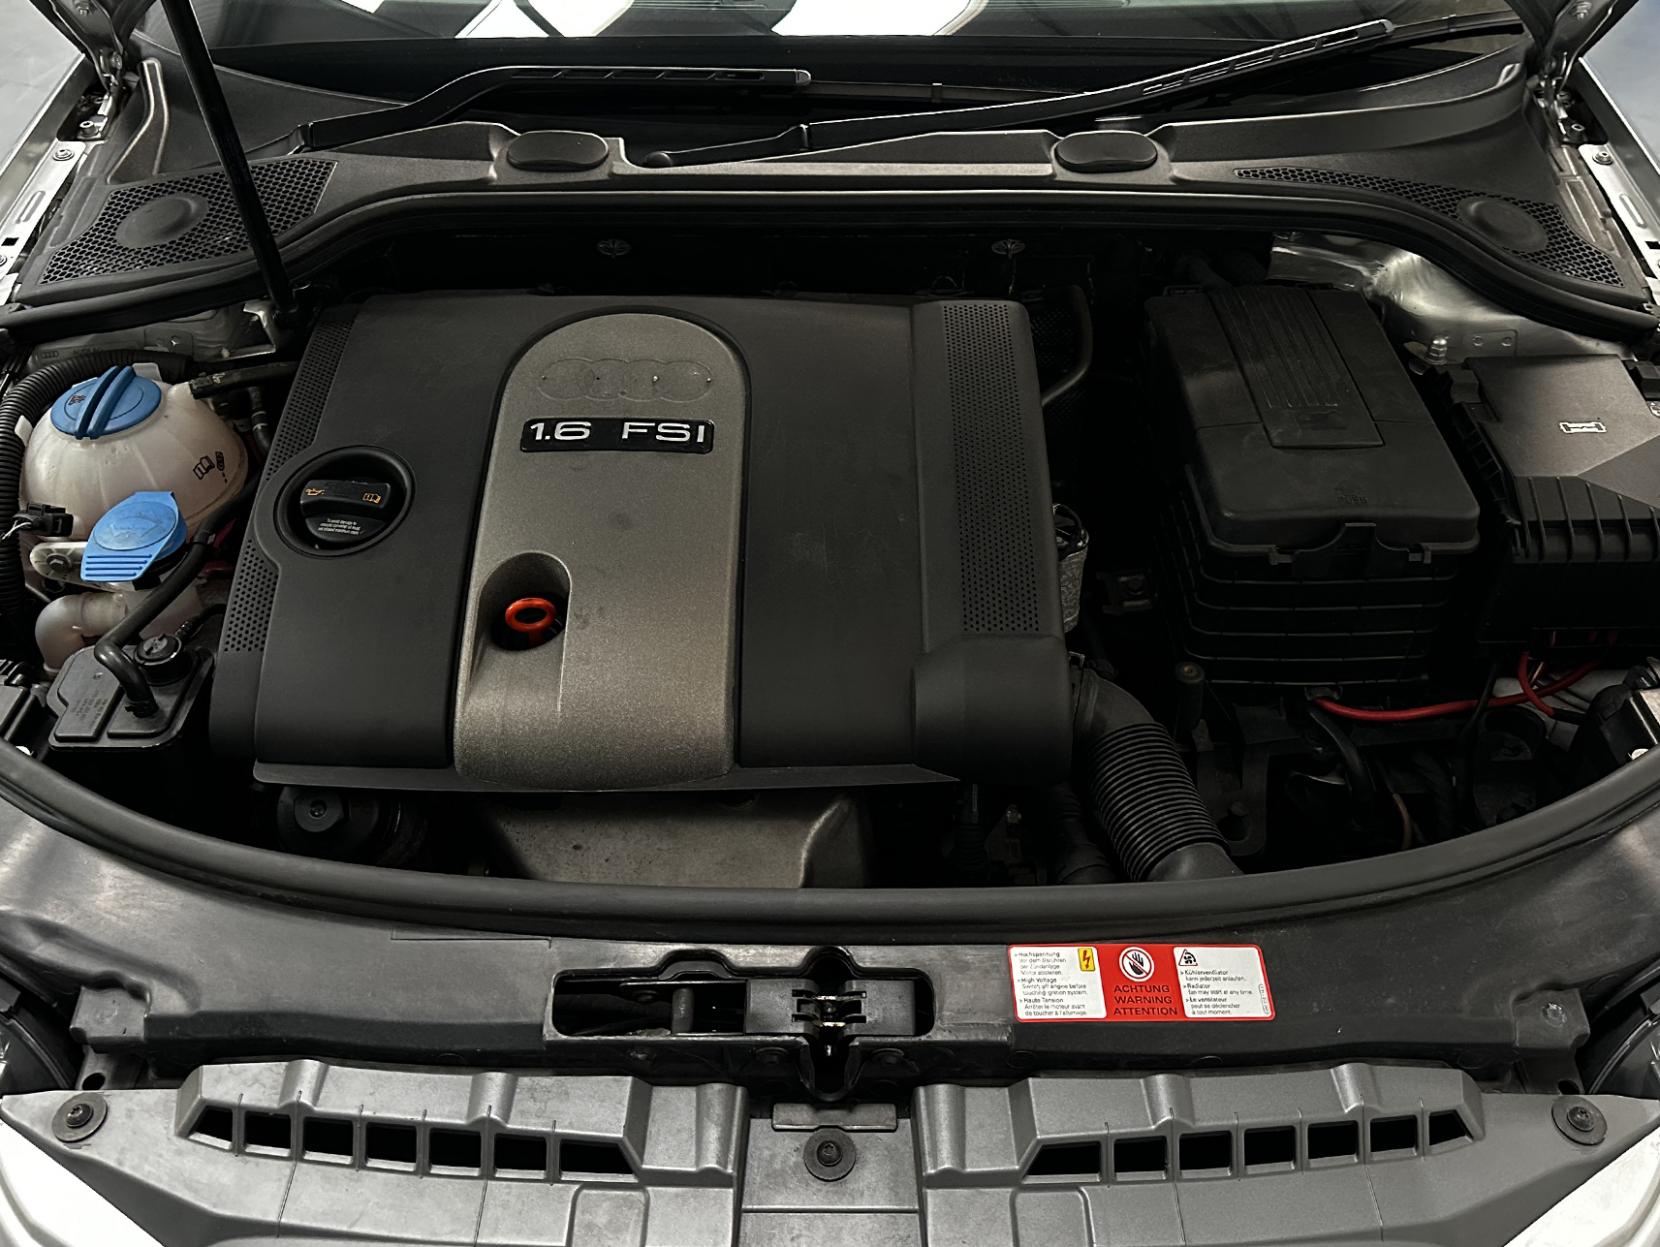 Audi A3 1.6 FSI SE Sportback 5dr Petrol Manual (158 g/km, 113 bhp)